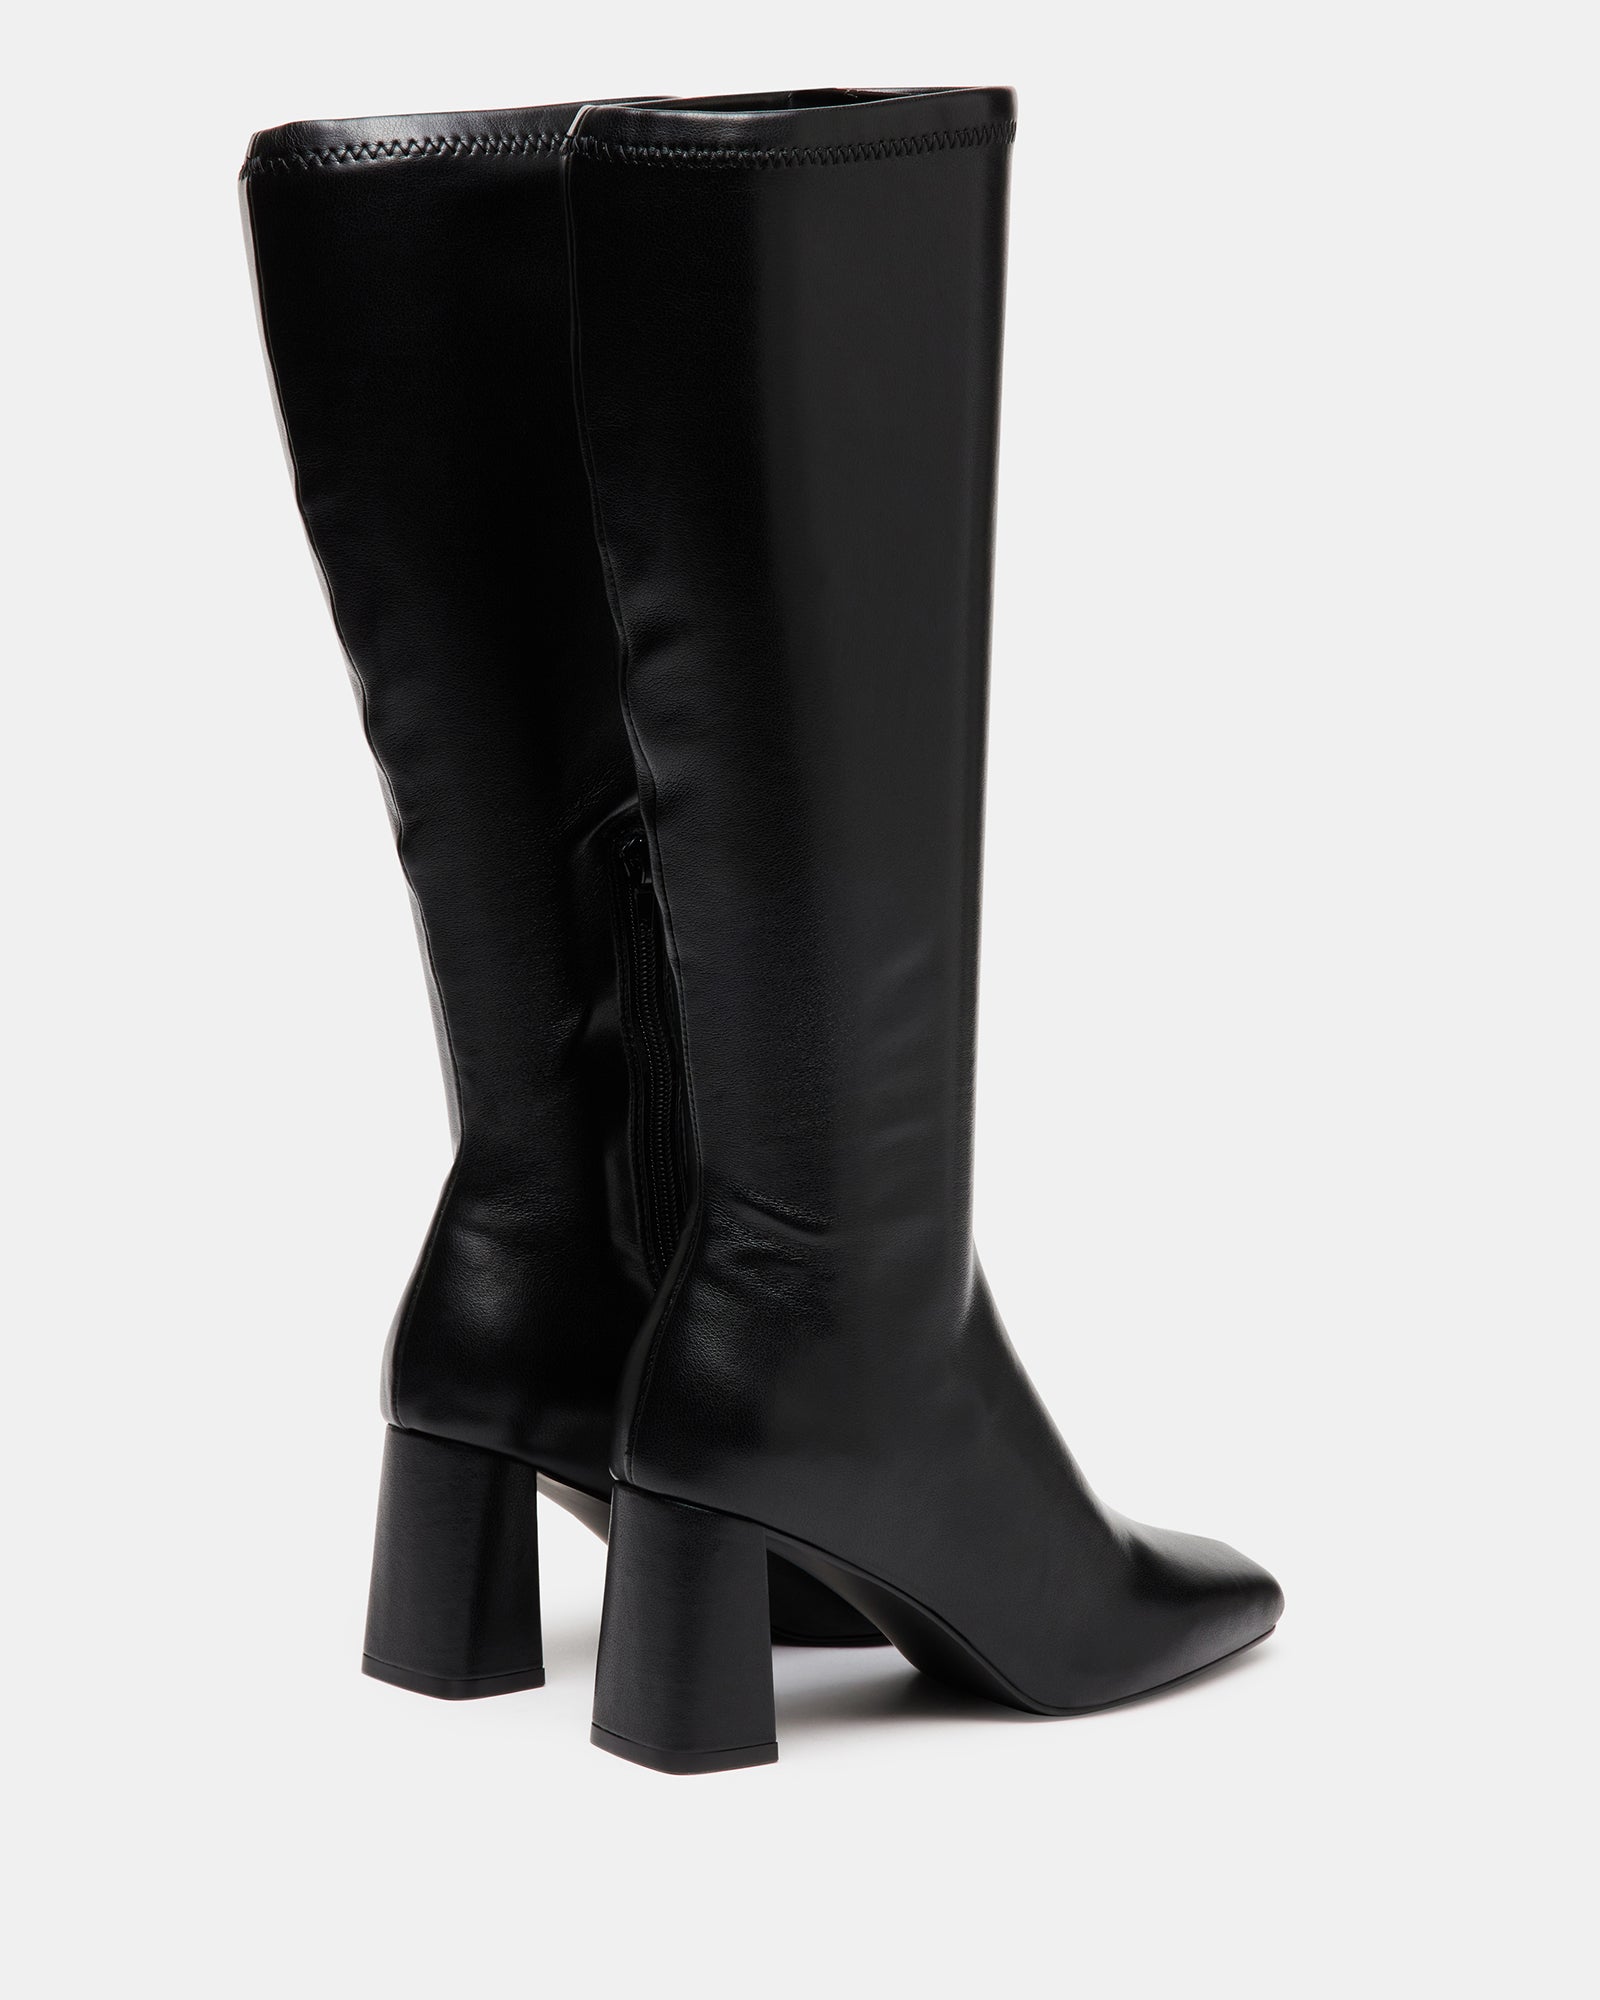 HOLLY Black Knee High Square Toe Boot | Women's Boots – Steve Madden